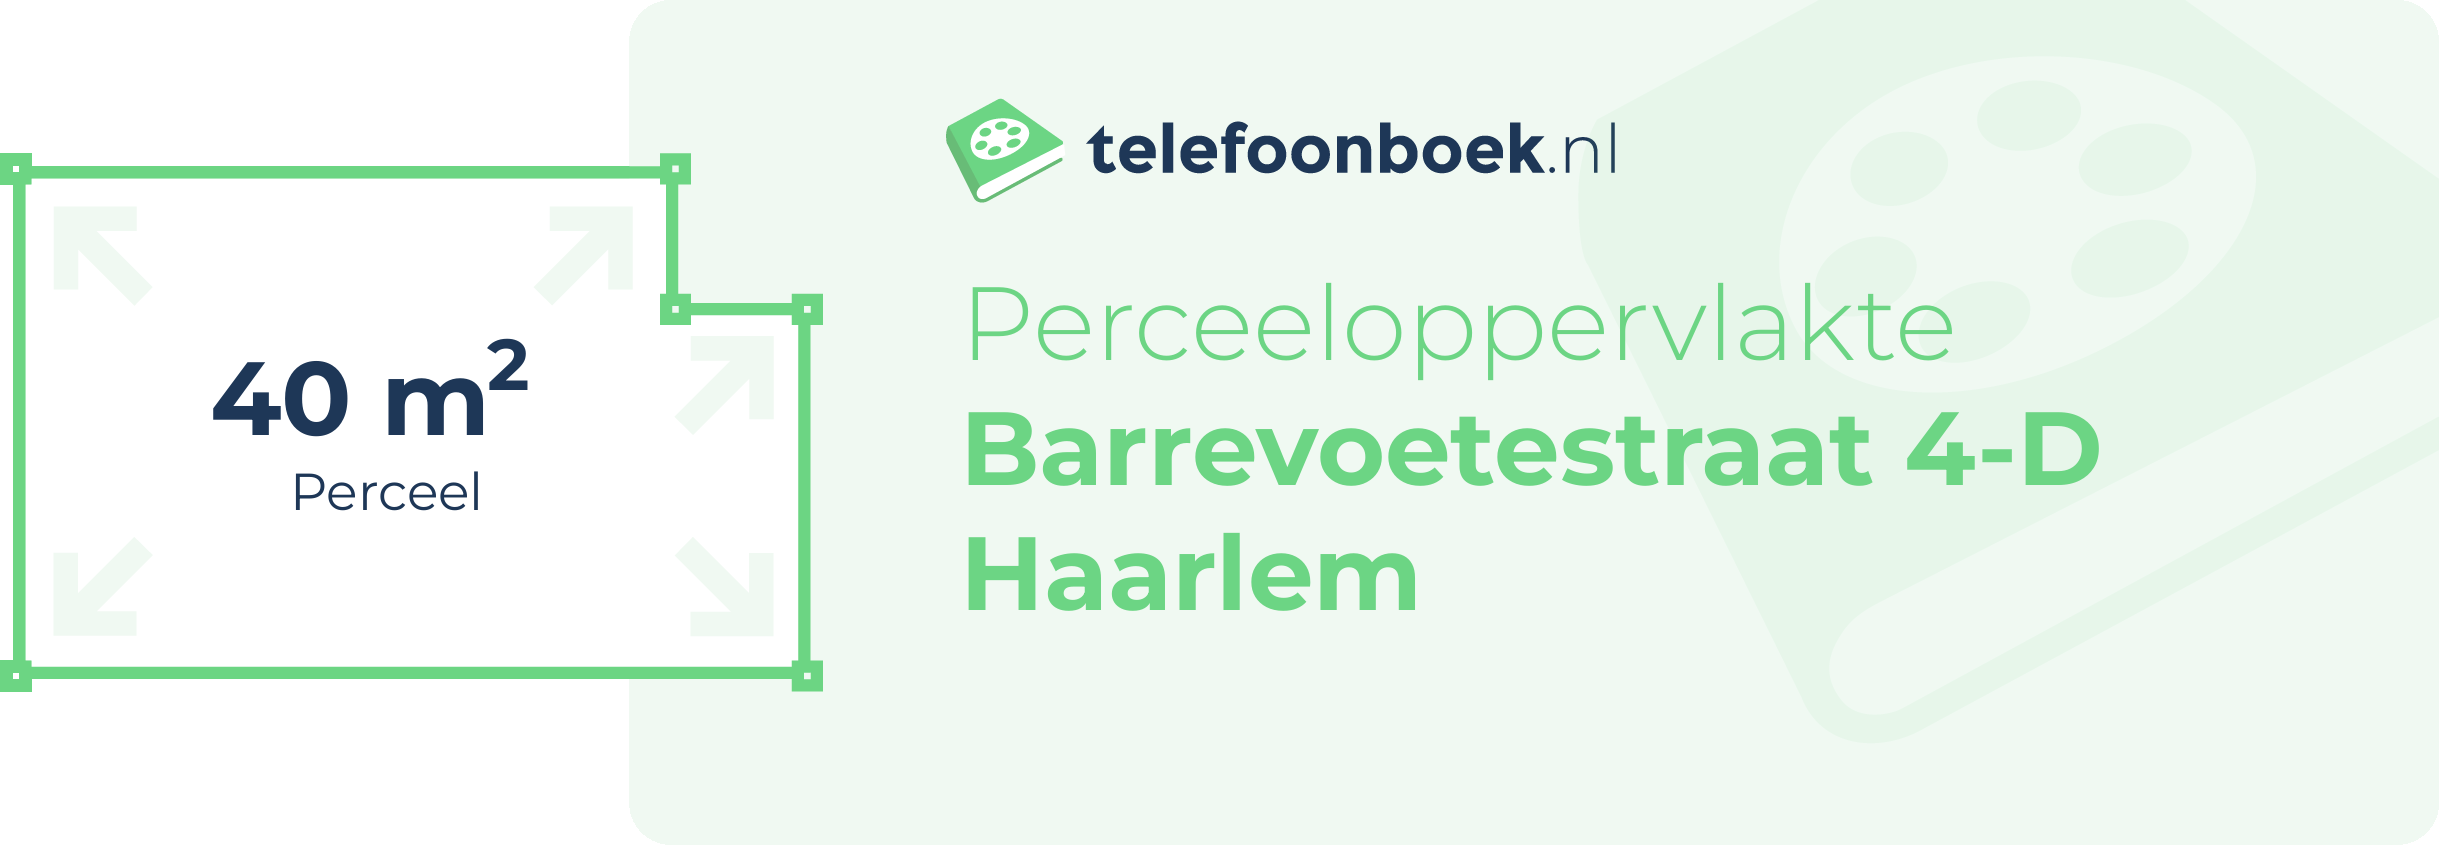 Perceeloppervlakte Barrevoetestraat 4-D Haarlem